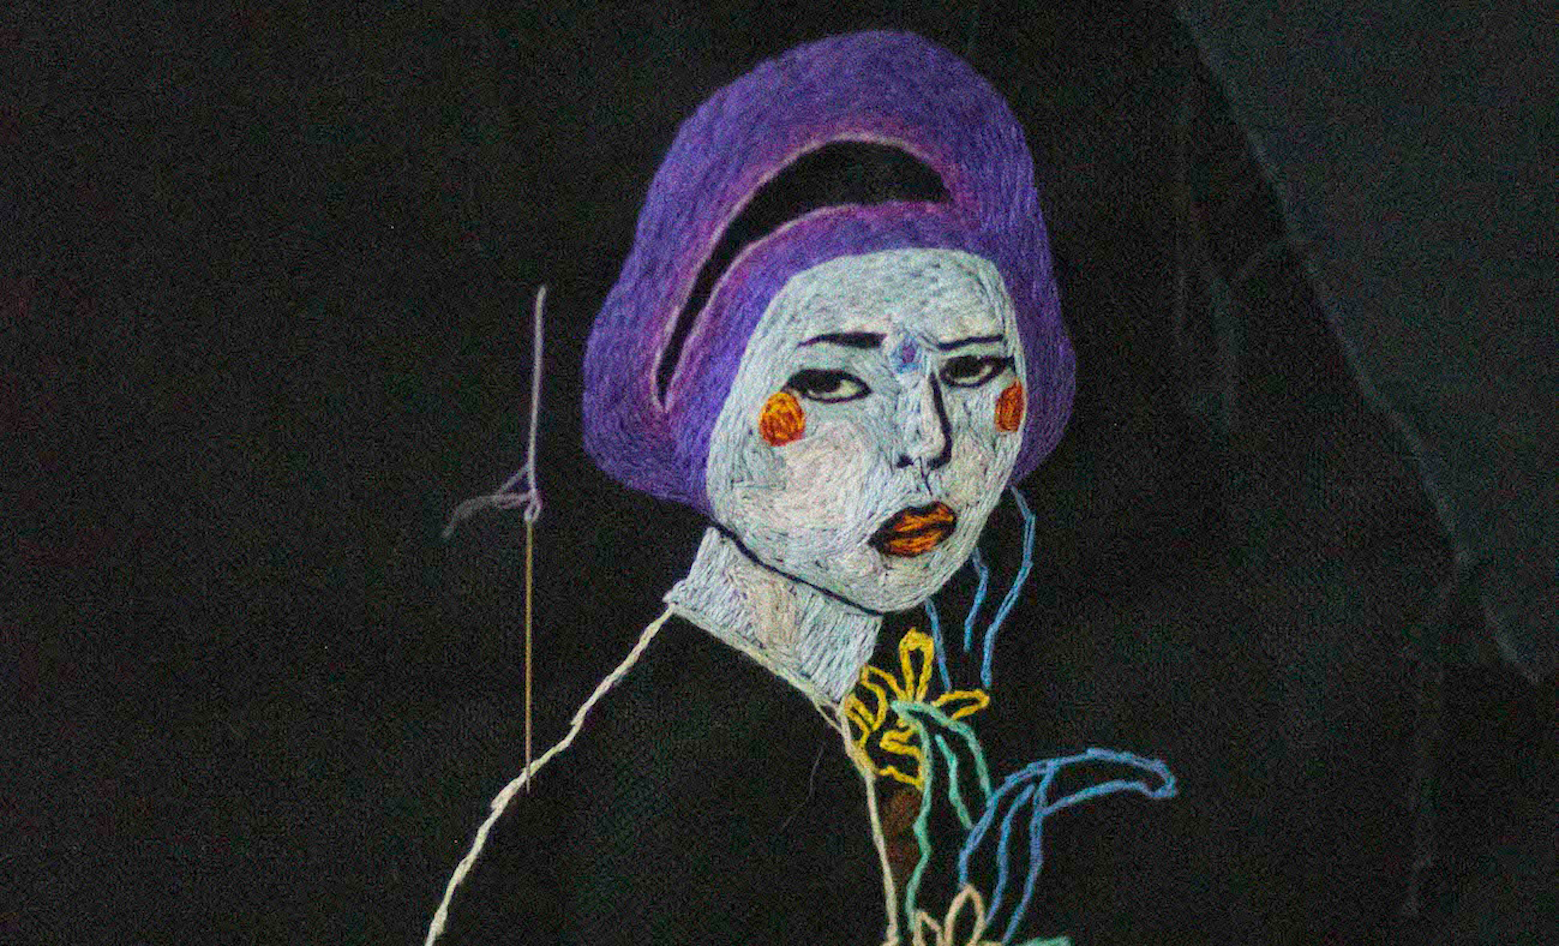 Geisha Wip Sml2 1 - Nerd Blog - Getting Down And Nerdy: Brett De Vos - Embroidery